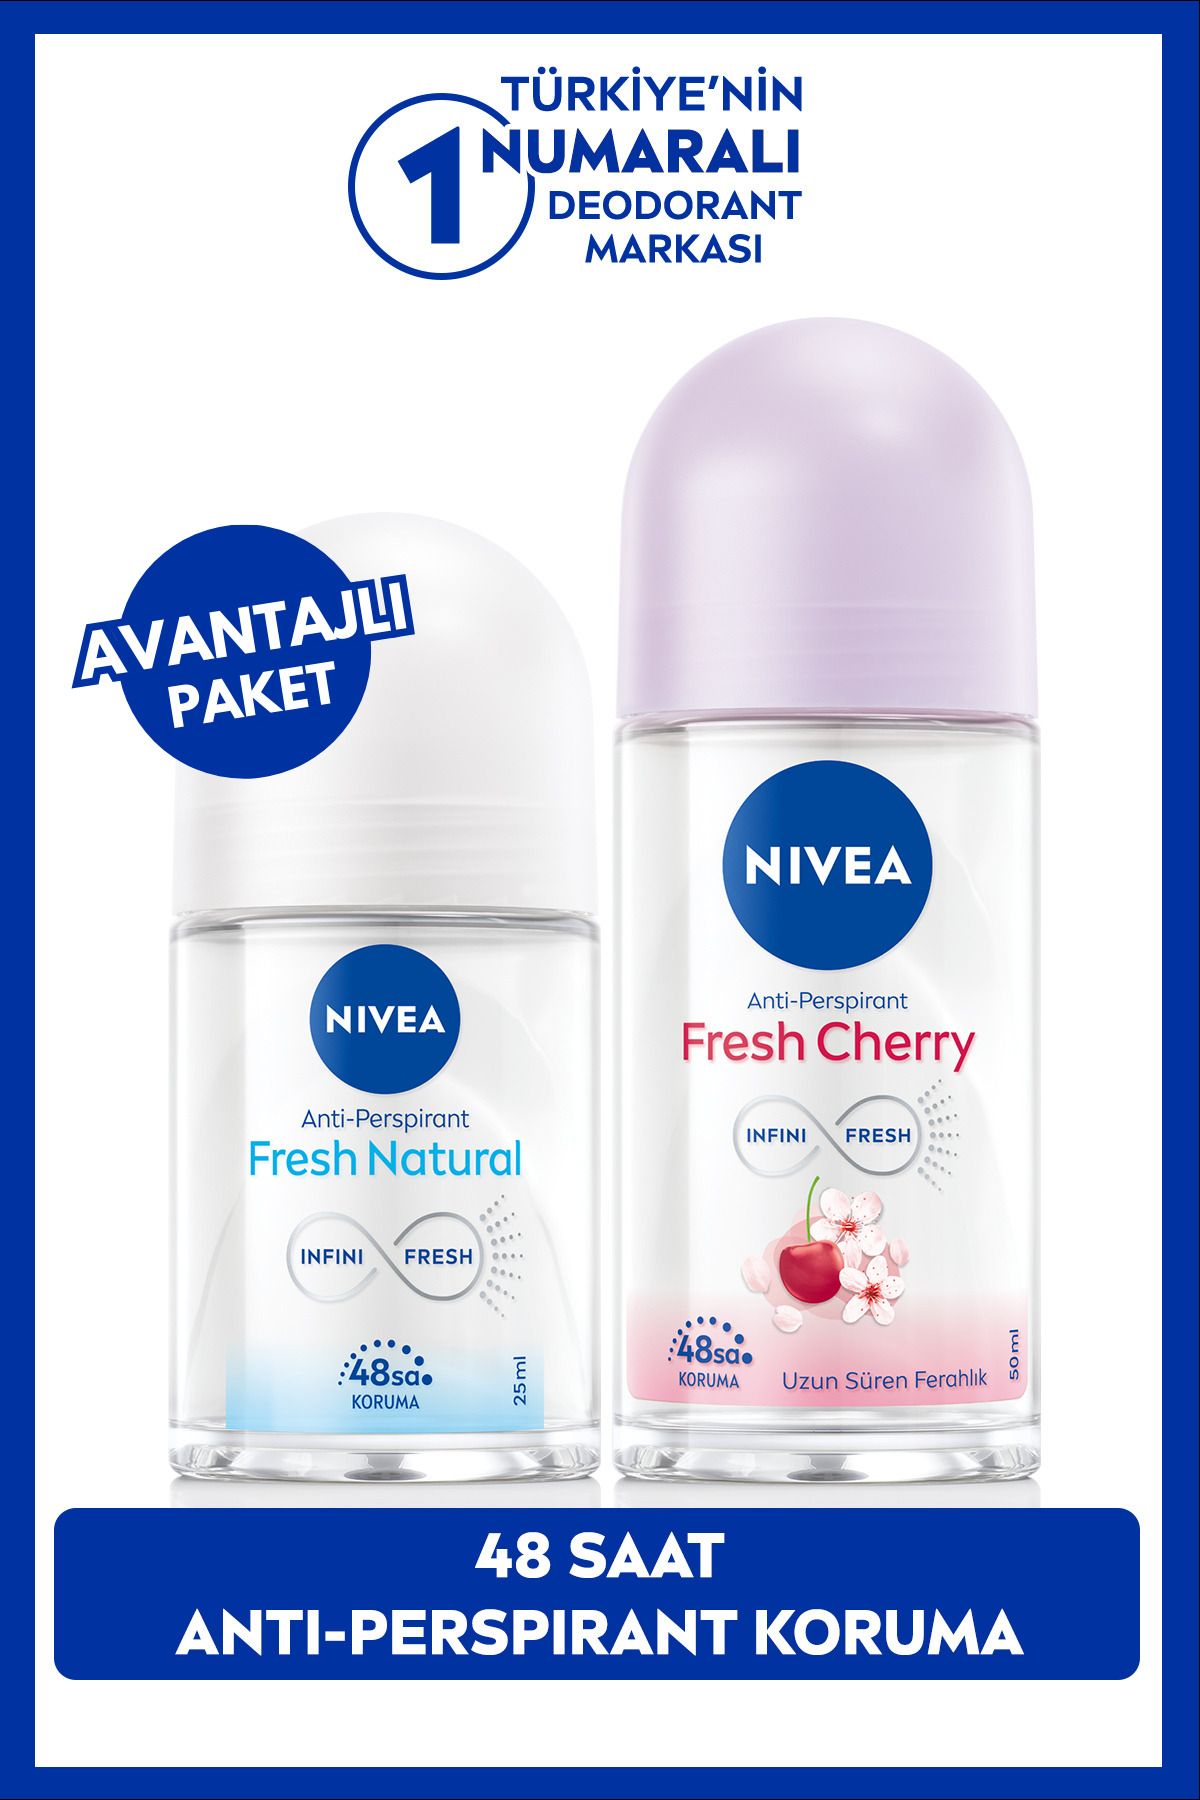 NIVEA Kadın Roll-on Deodorant Fresh Cherry 50ml ve Mini Roll-on Fresh Natural 25ml Set, 48 Saat Koruma